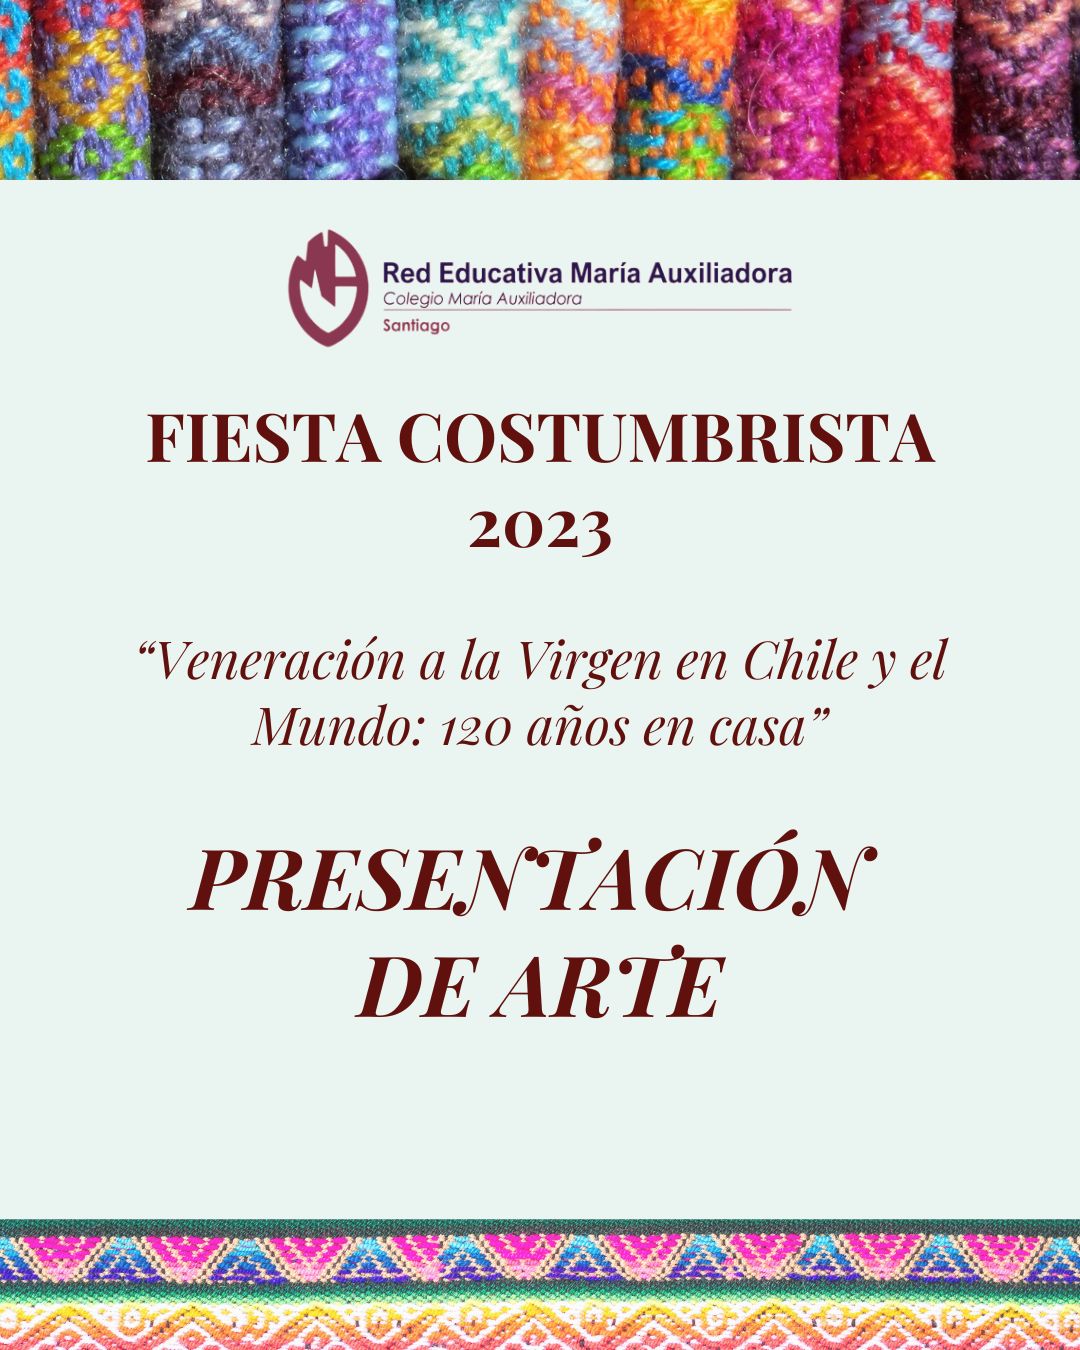 Fiesta Costumbrista - Muestra de Arte